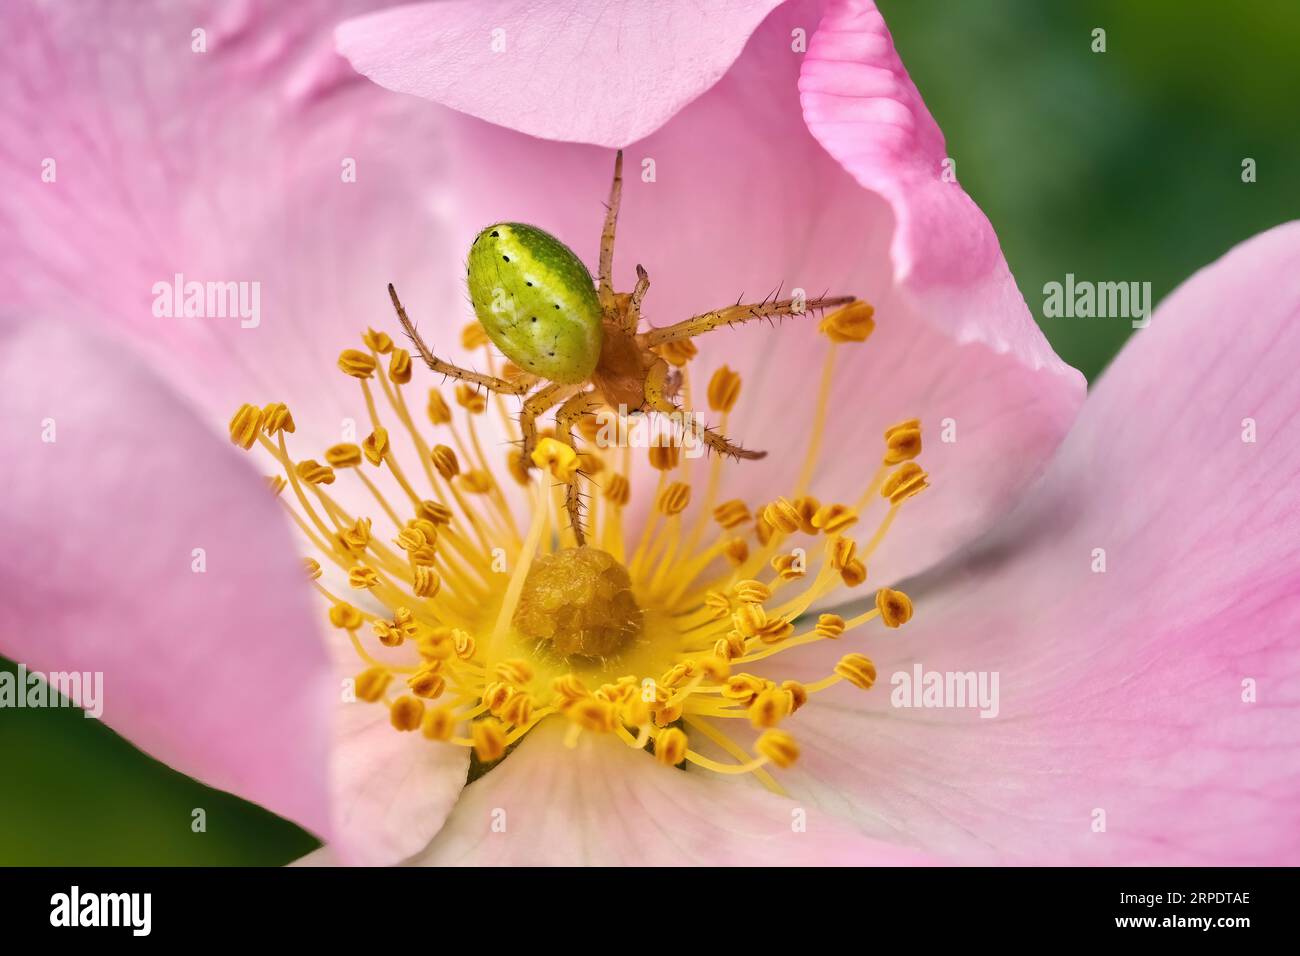 Cucumber green spider (Araniella cucurbitina) on the flower of a dog rose Stock Photo